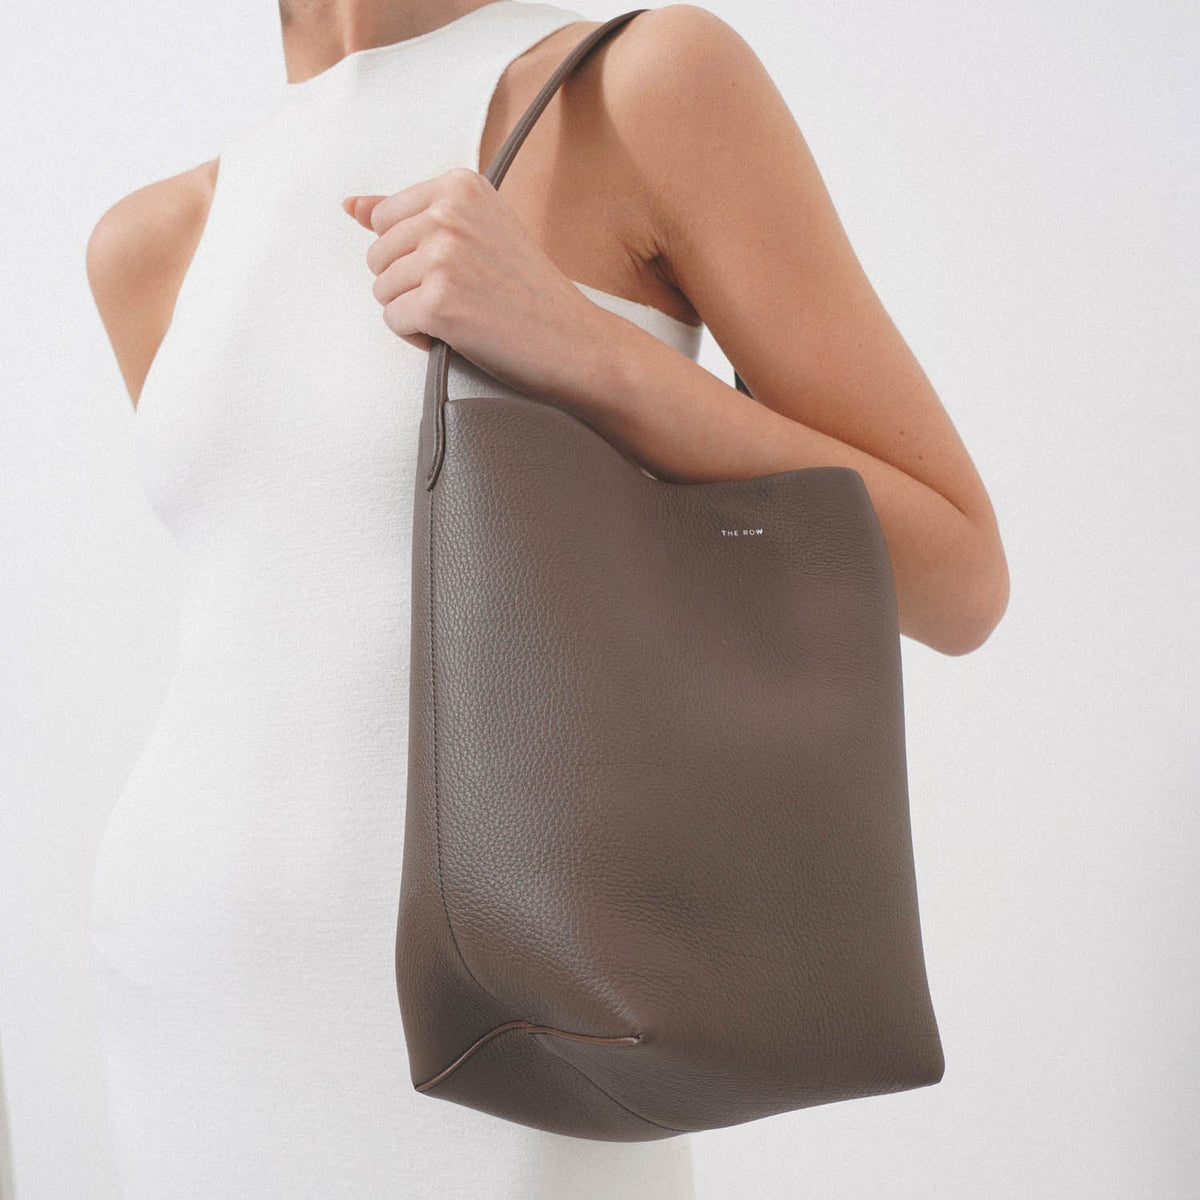 Allie Medium Leather Shoulder Bag in Beige - The Row